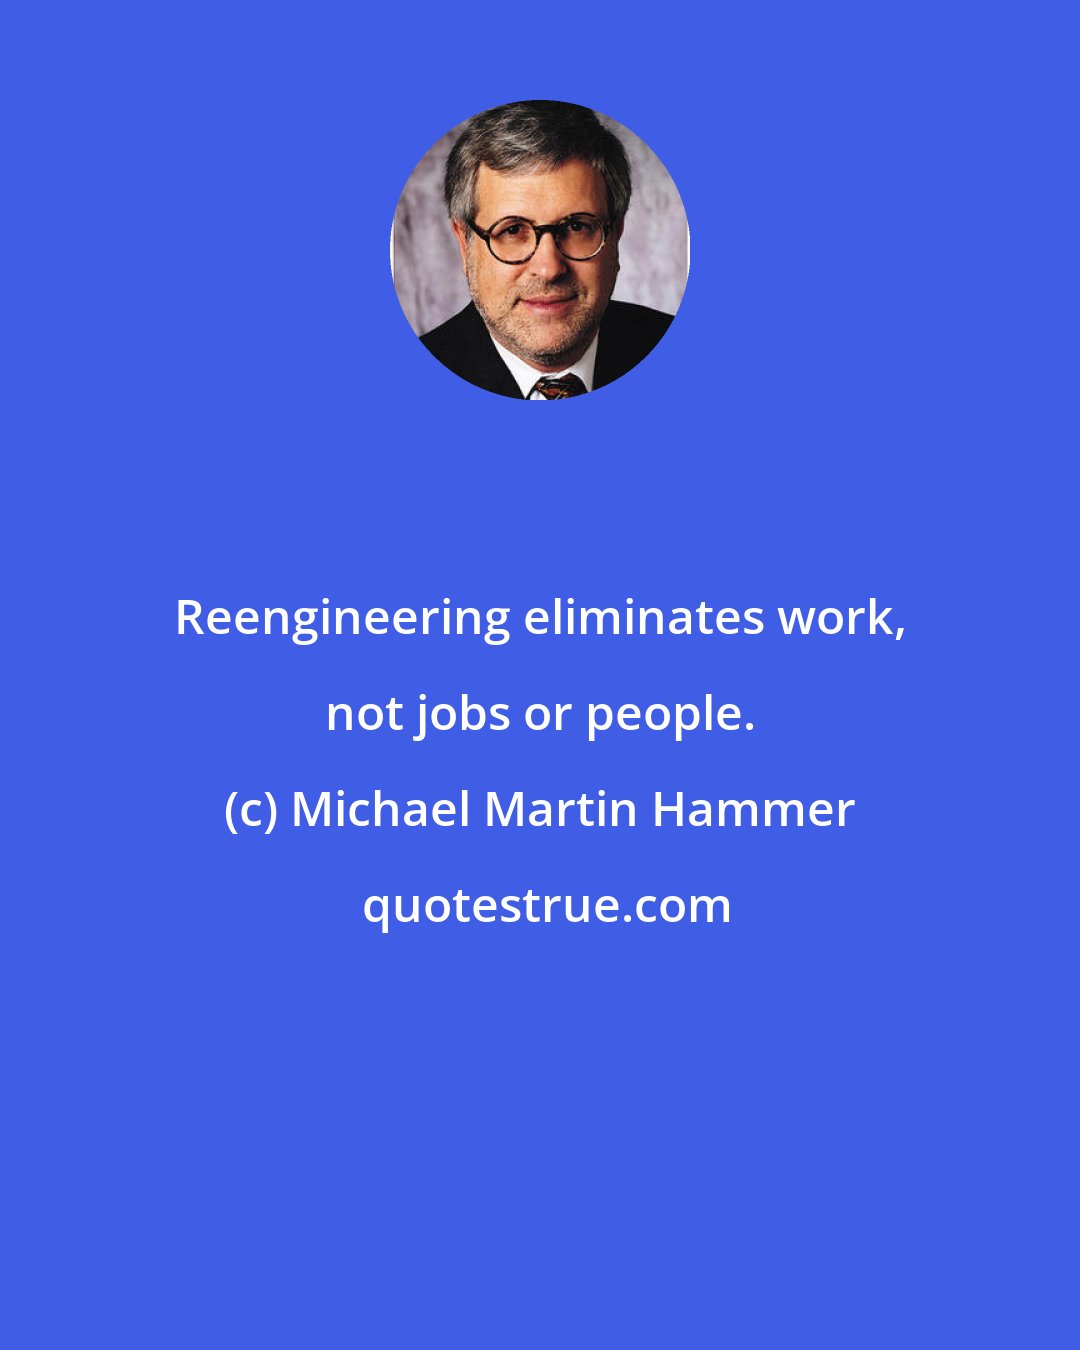 Michael Martin Hammer: Reengineering eliminates work, not jobs or people.